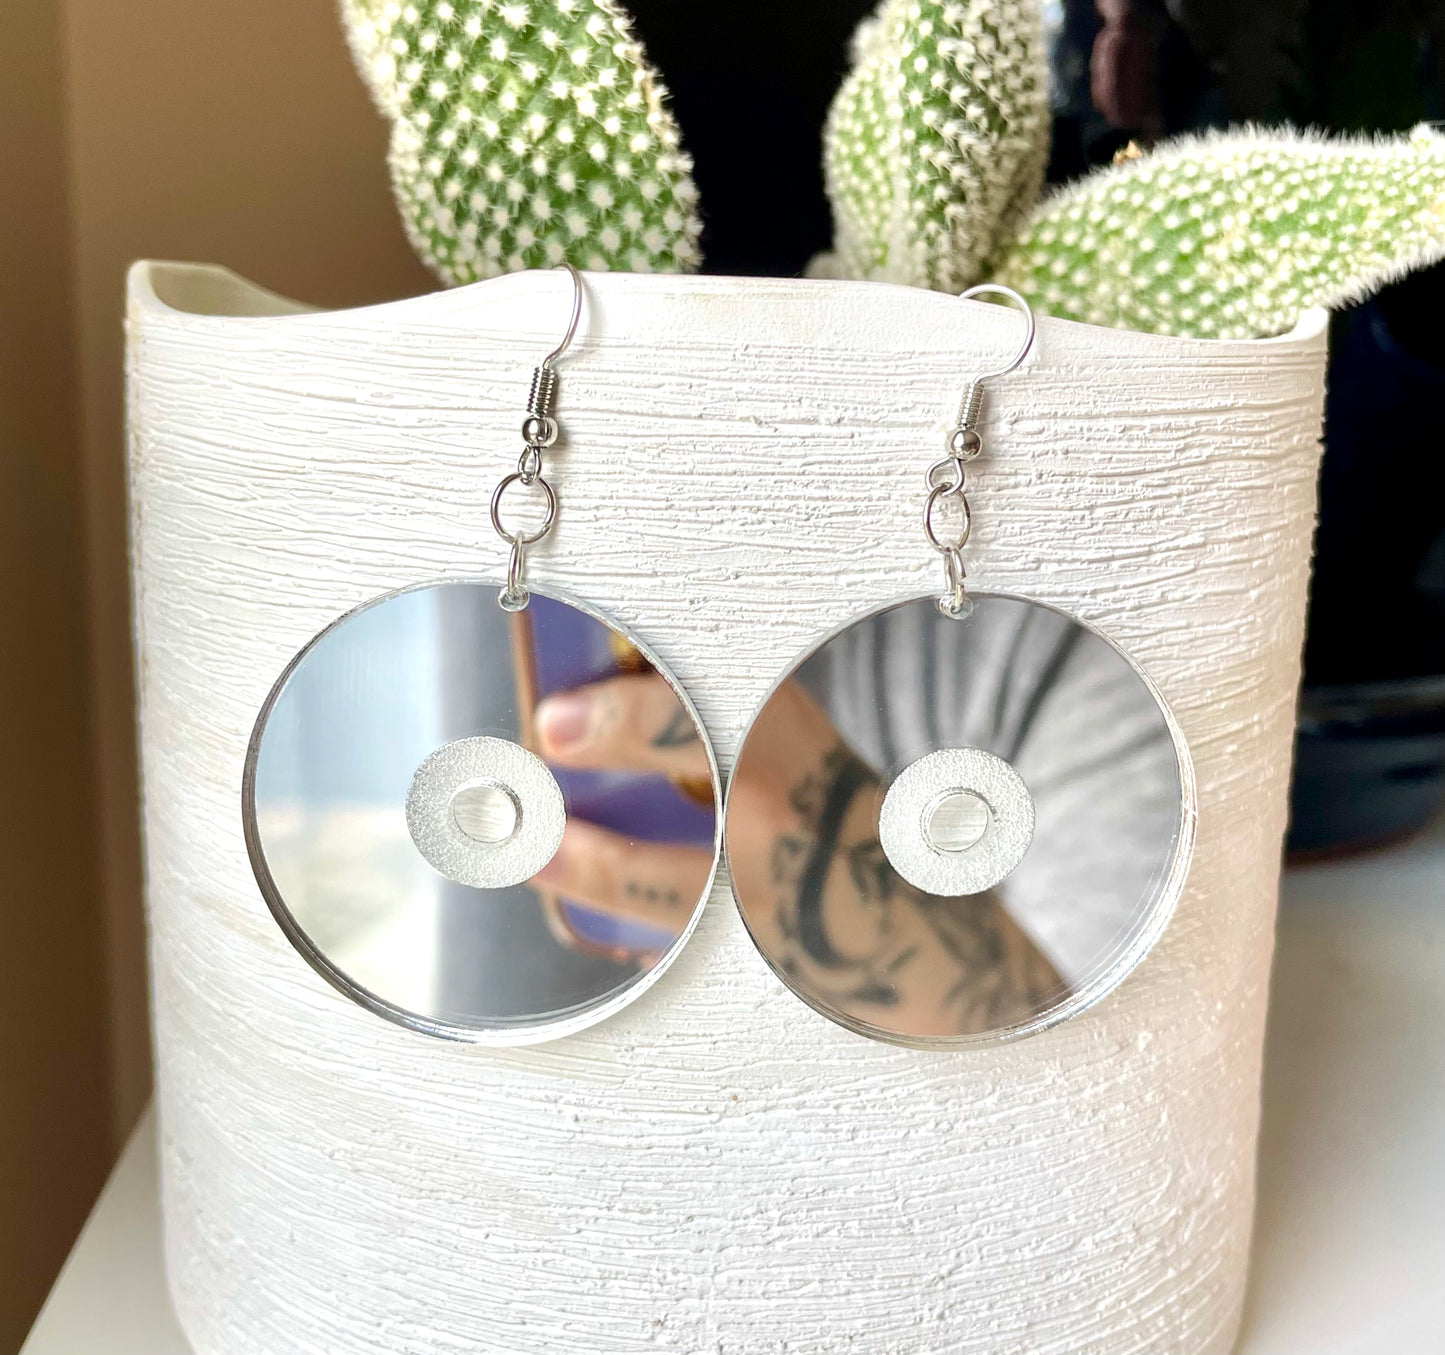 Compact disk earrings